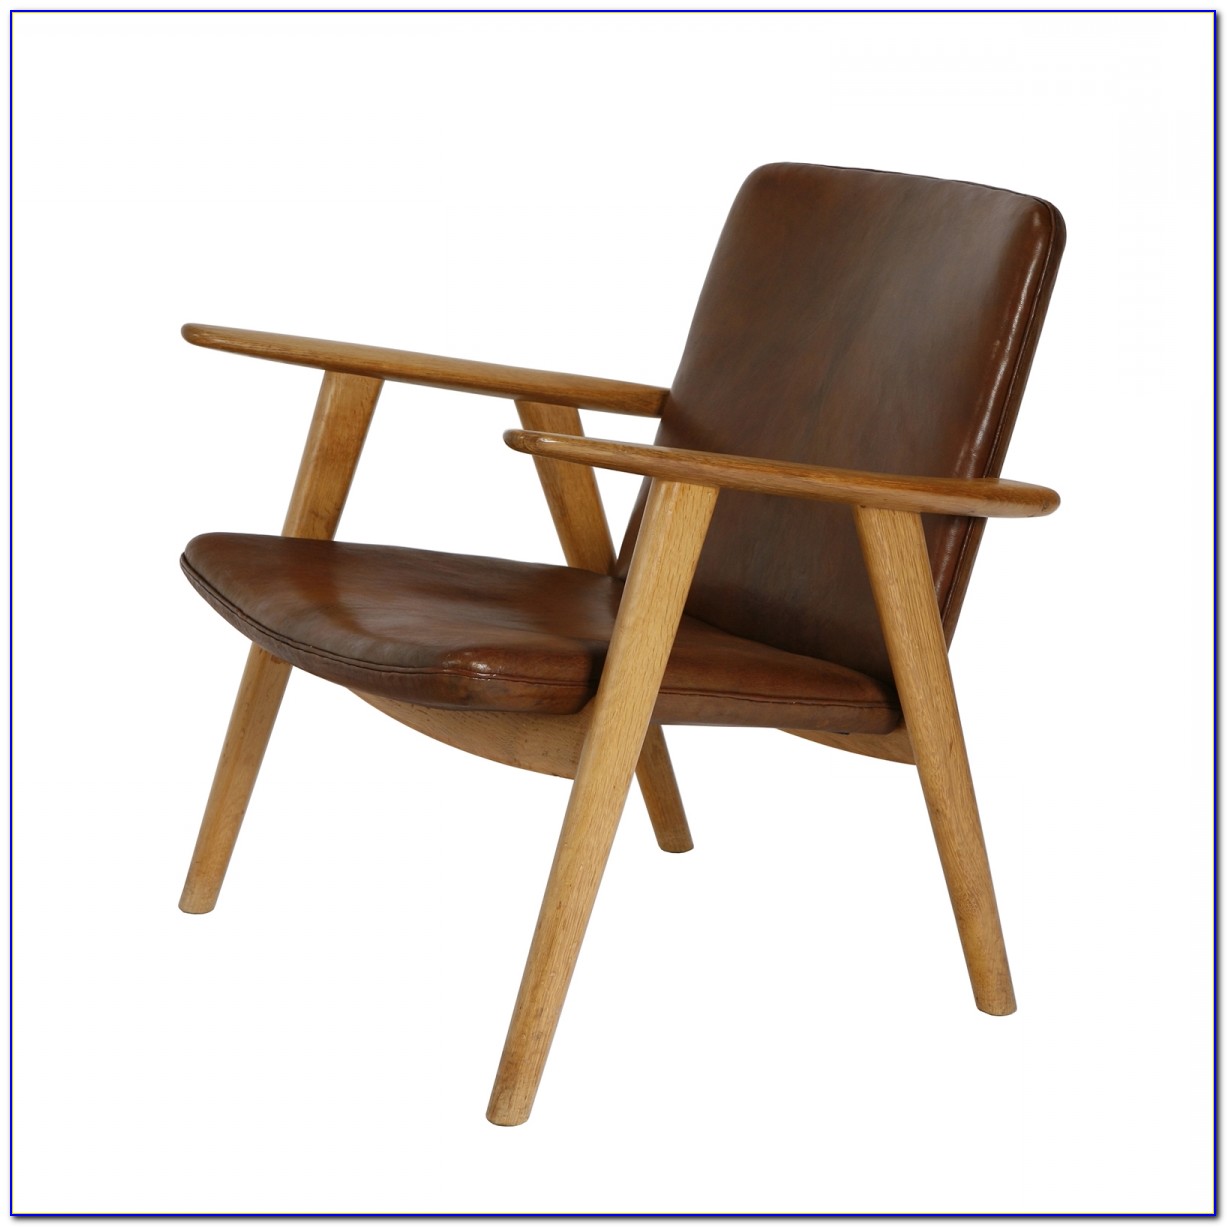 Hans Wegner Chairs Ebay